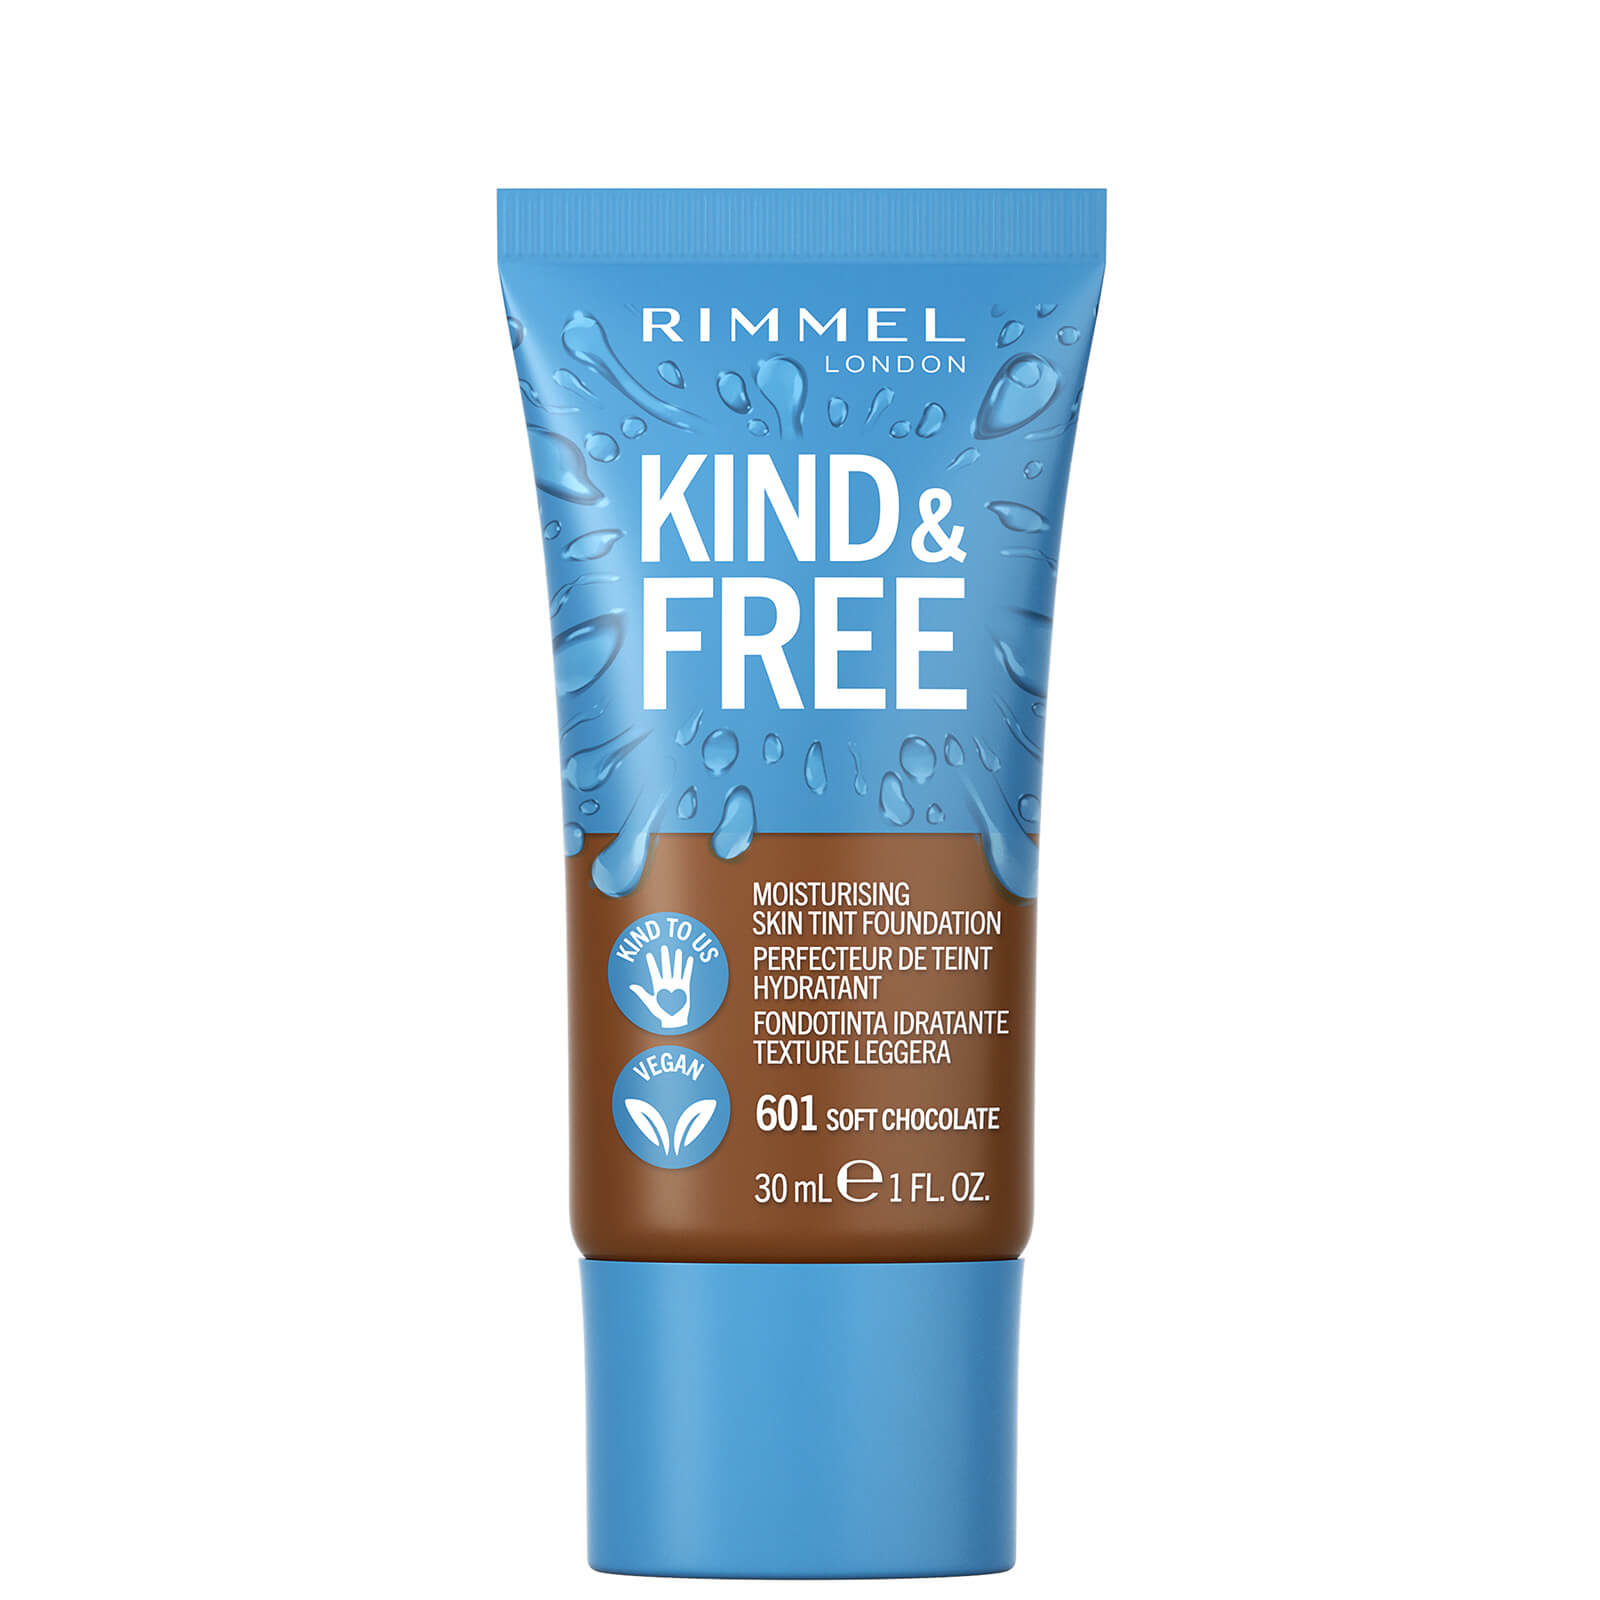 Rimmel Kind and Free Skin Tint Moisturising Foundation 30ml (Various Shades) - Soft Chocolate von Rimmel